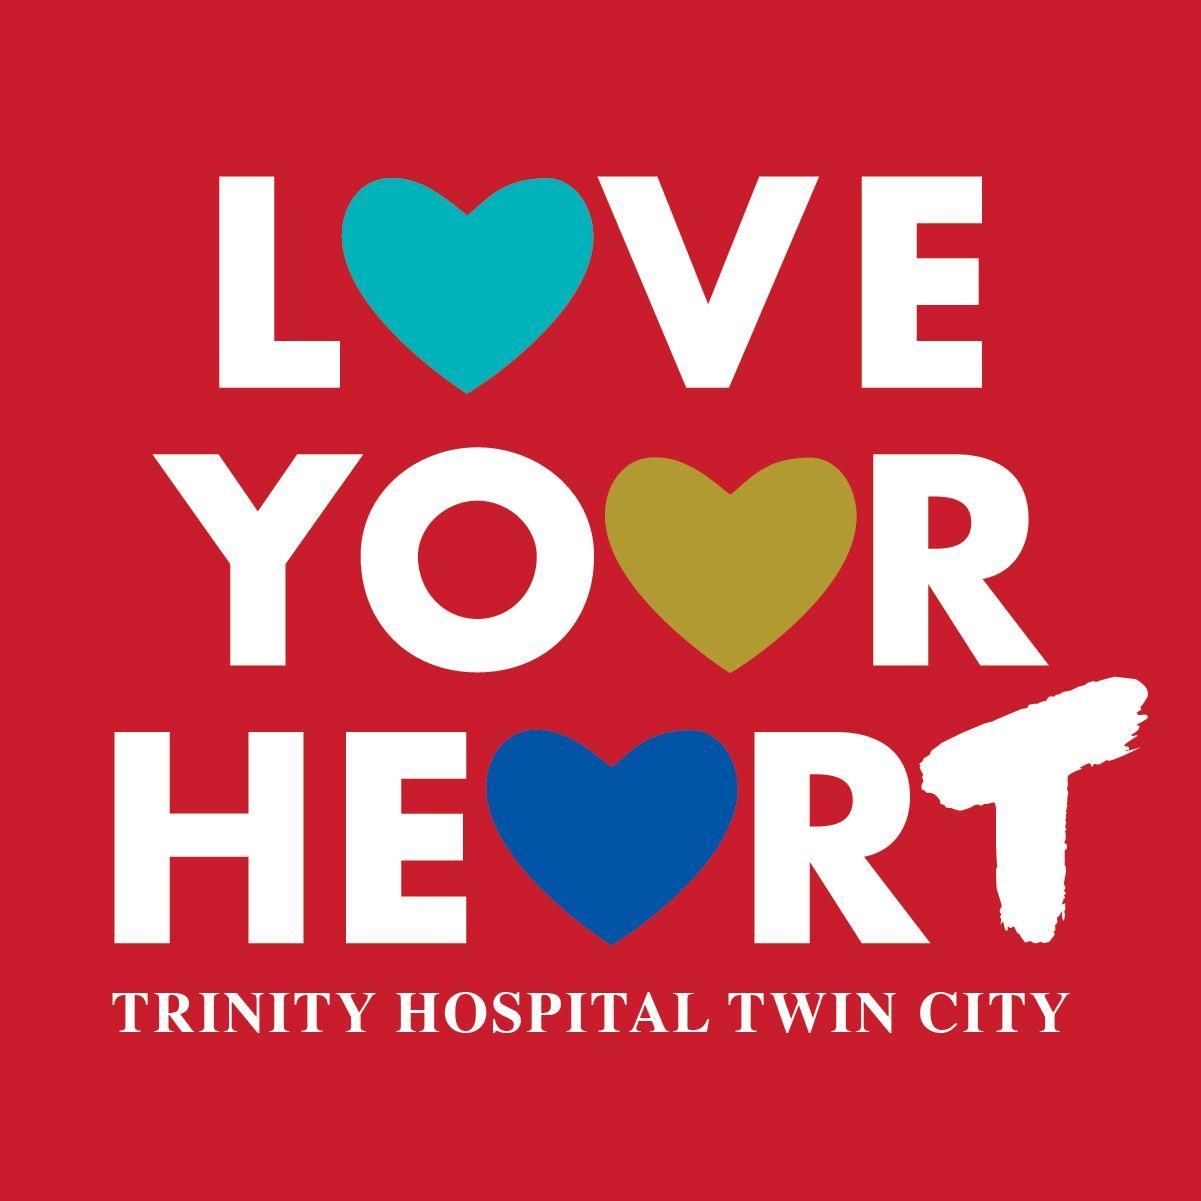 Love Your Heart Logo - Love Your Heart Free Event - Trinity Hospital Twin City